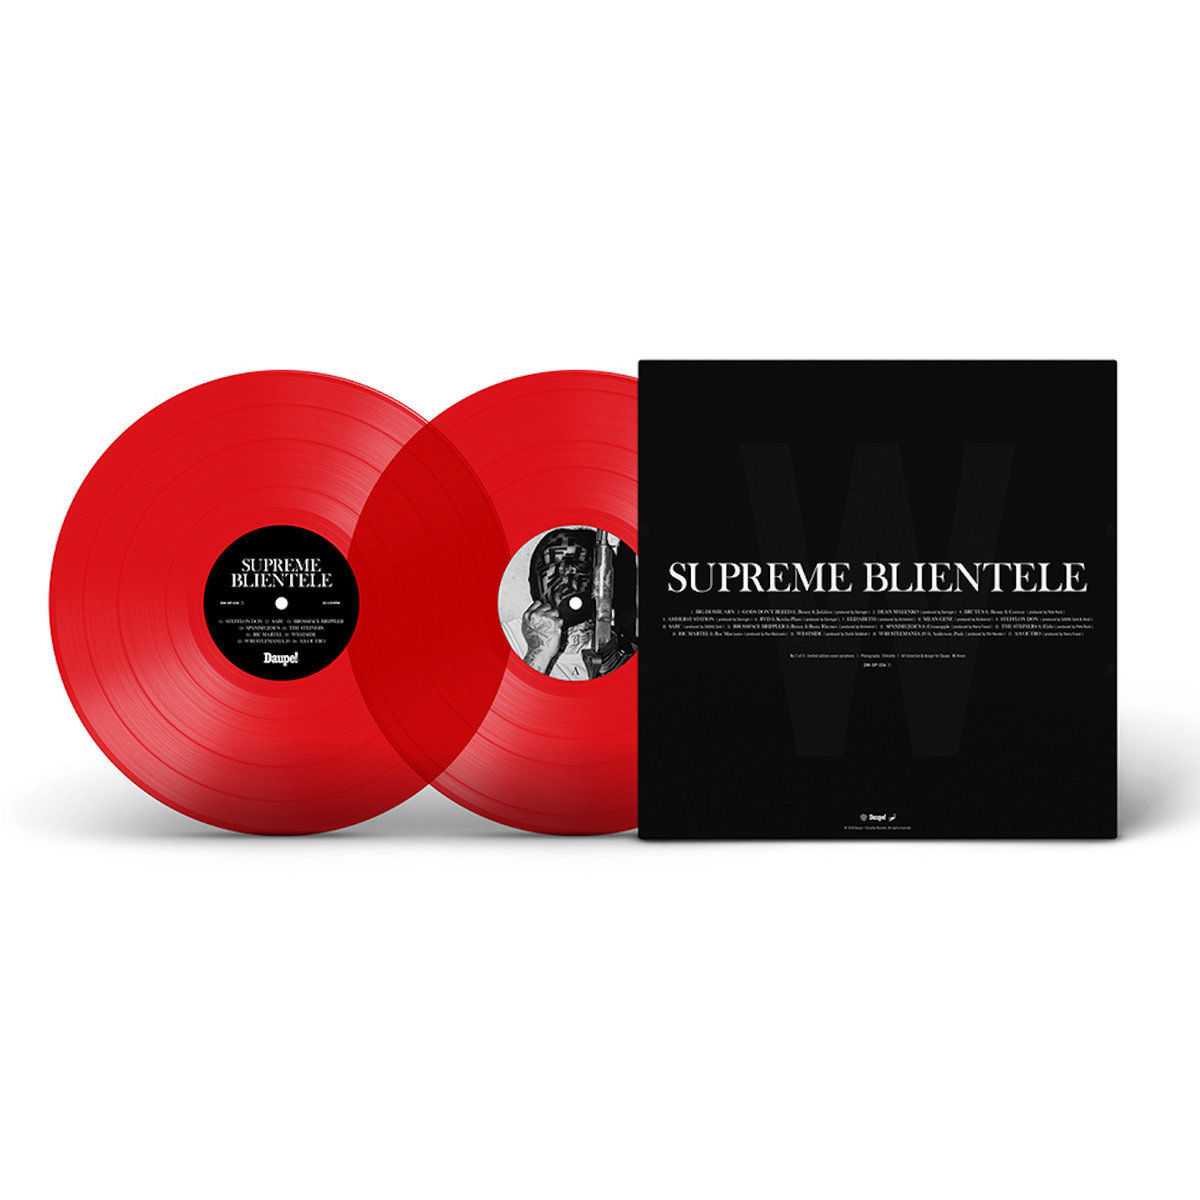 popsike.com - Westside Gunn - Supreme Blientele Limited Edition RED Double Vinyl Daupe Records auction details